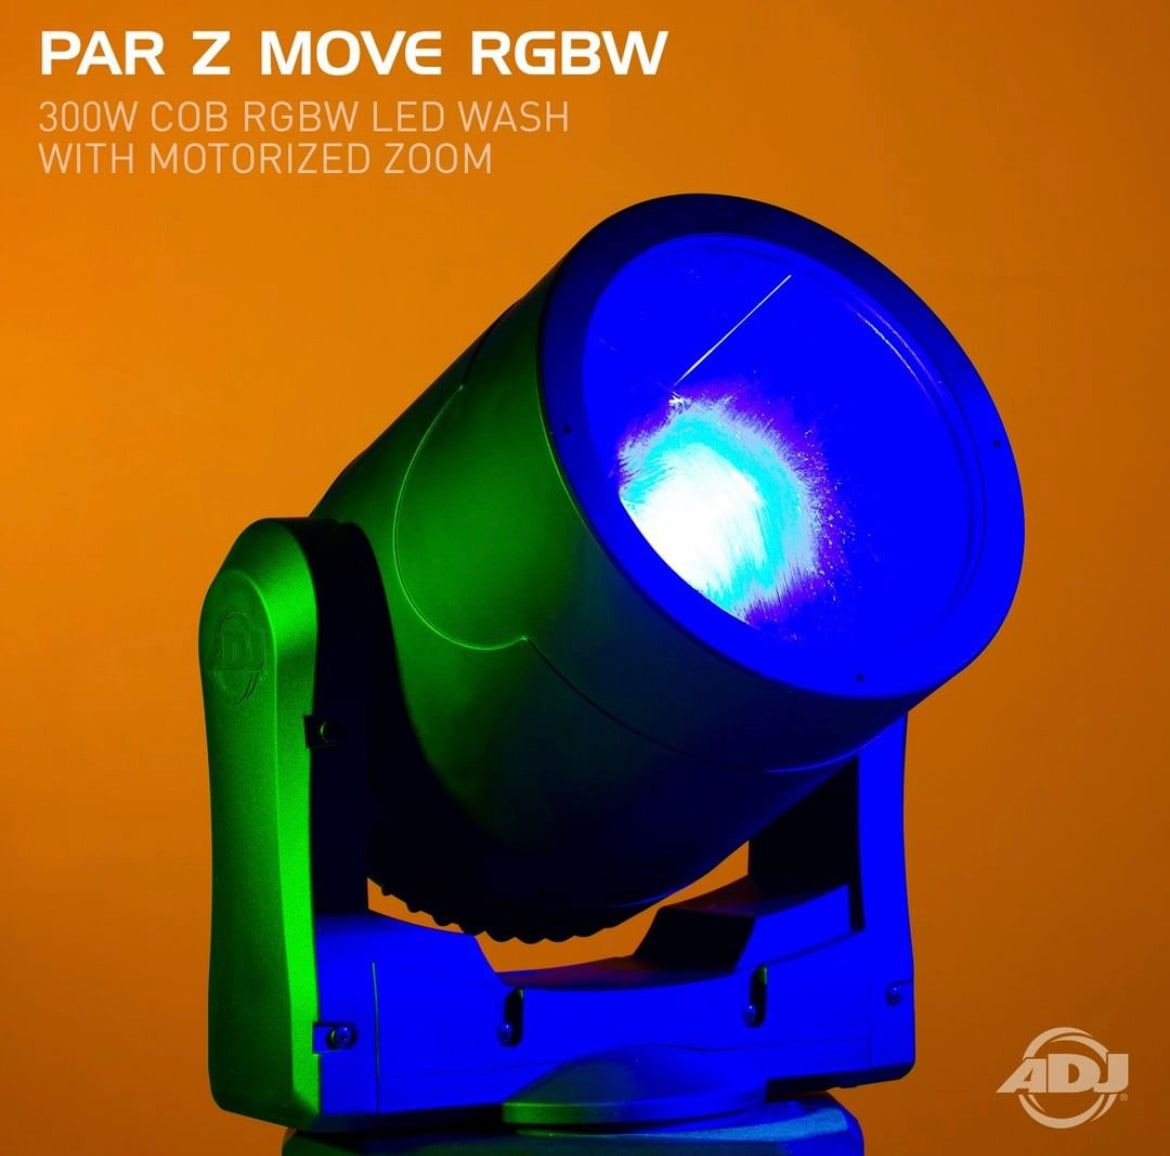 American DJ Par Z Move RGBW 300W COB (Chip on Board) RGBW LED Moving Head